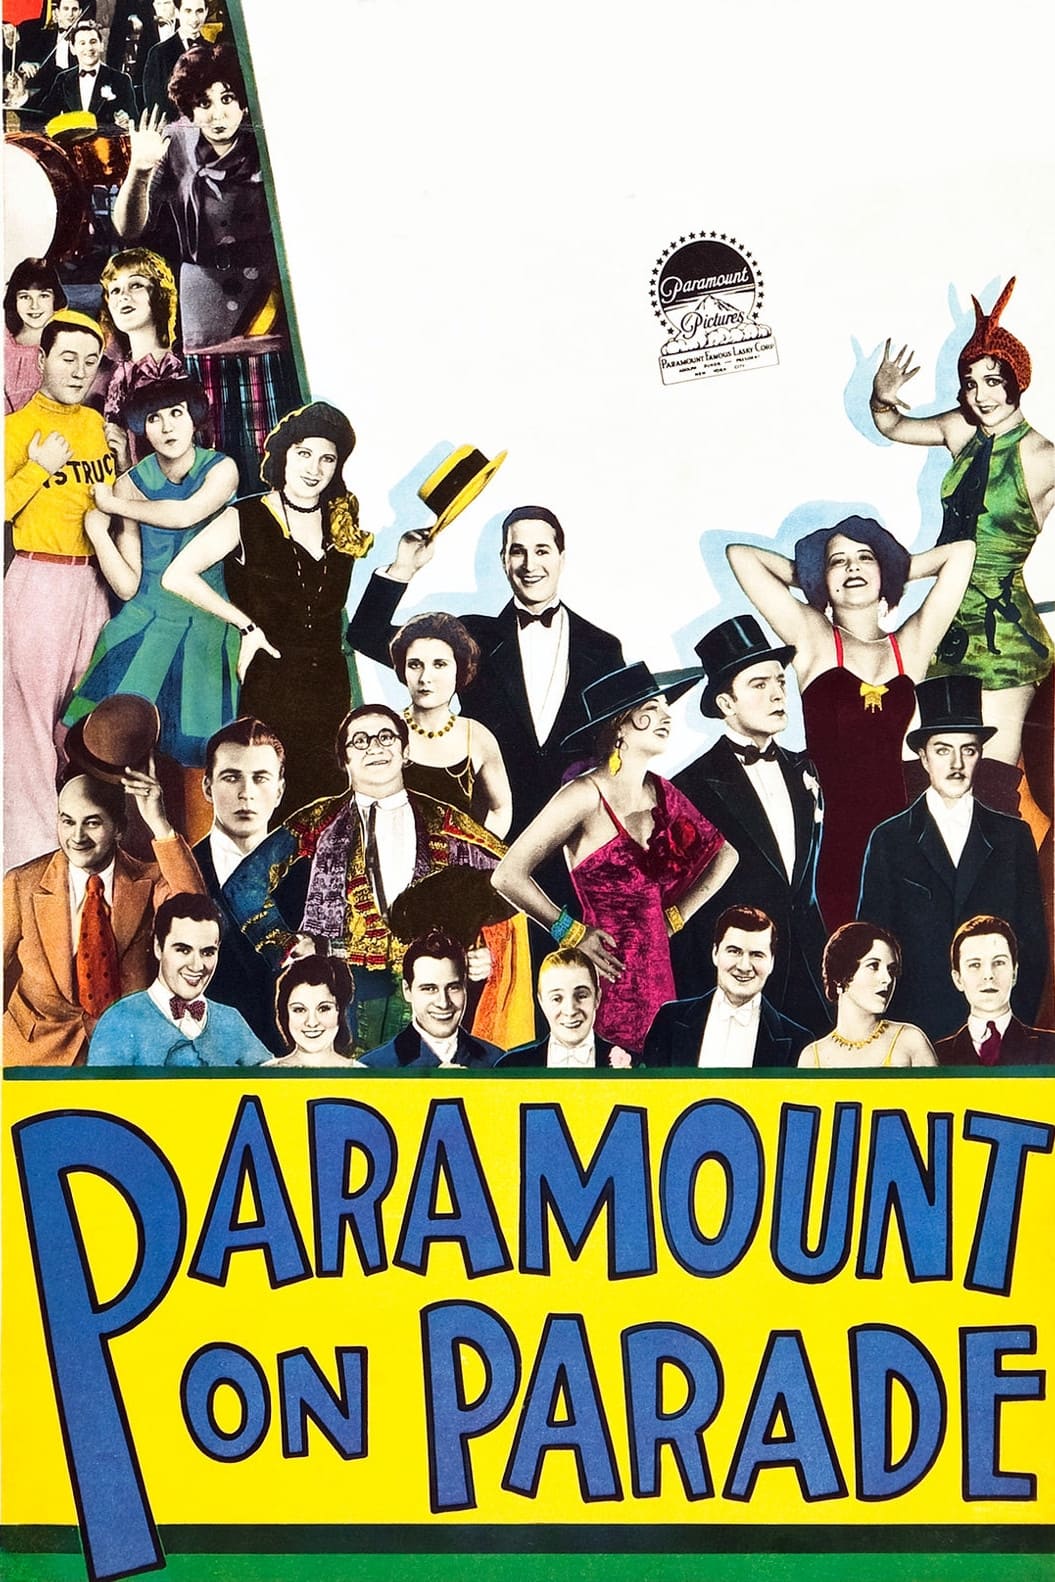 Paramount-Parade